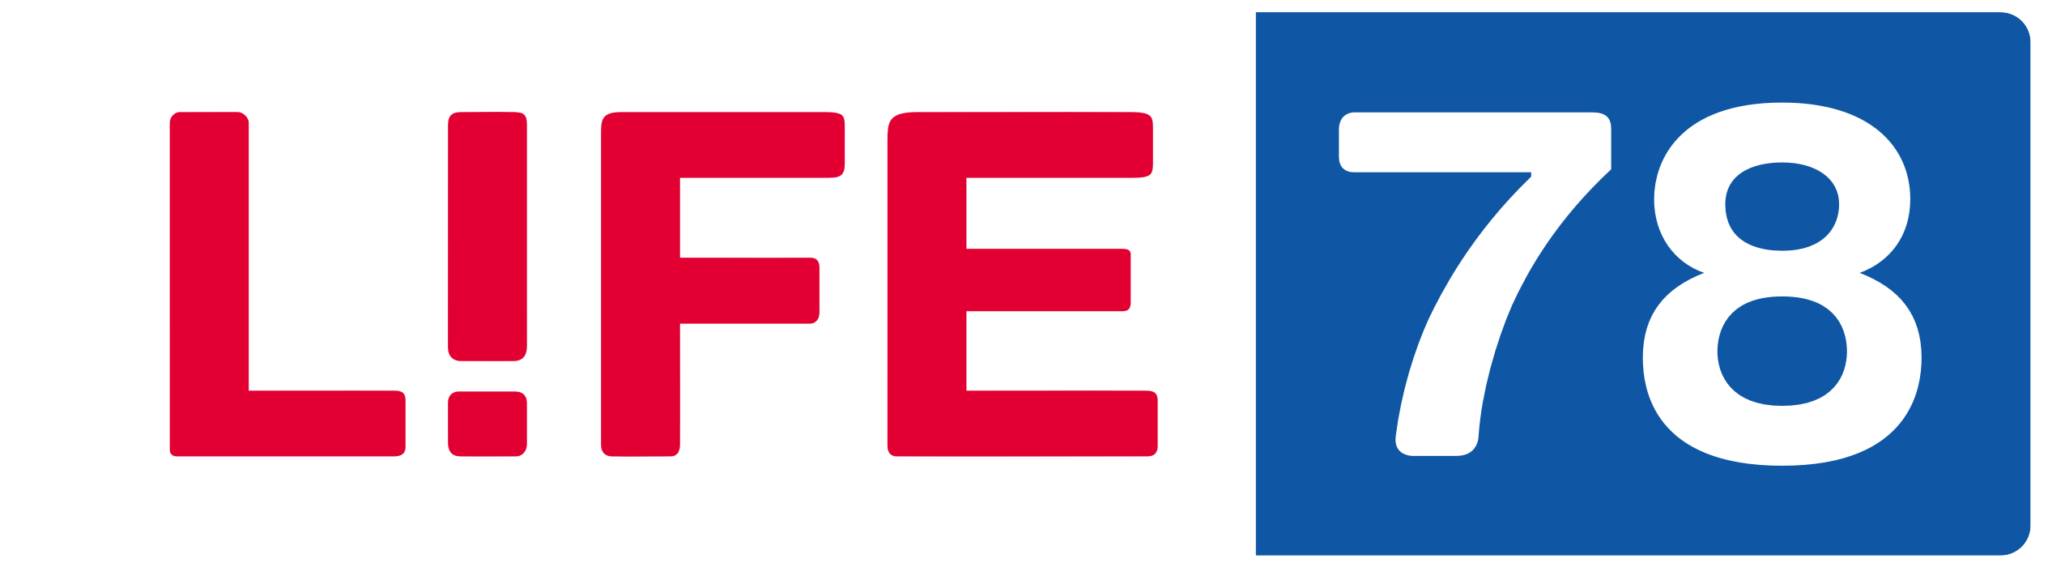 78 Канал логотип. Life 78 логотип. Телеканал Life. Телеканал Life лого.